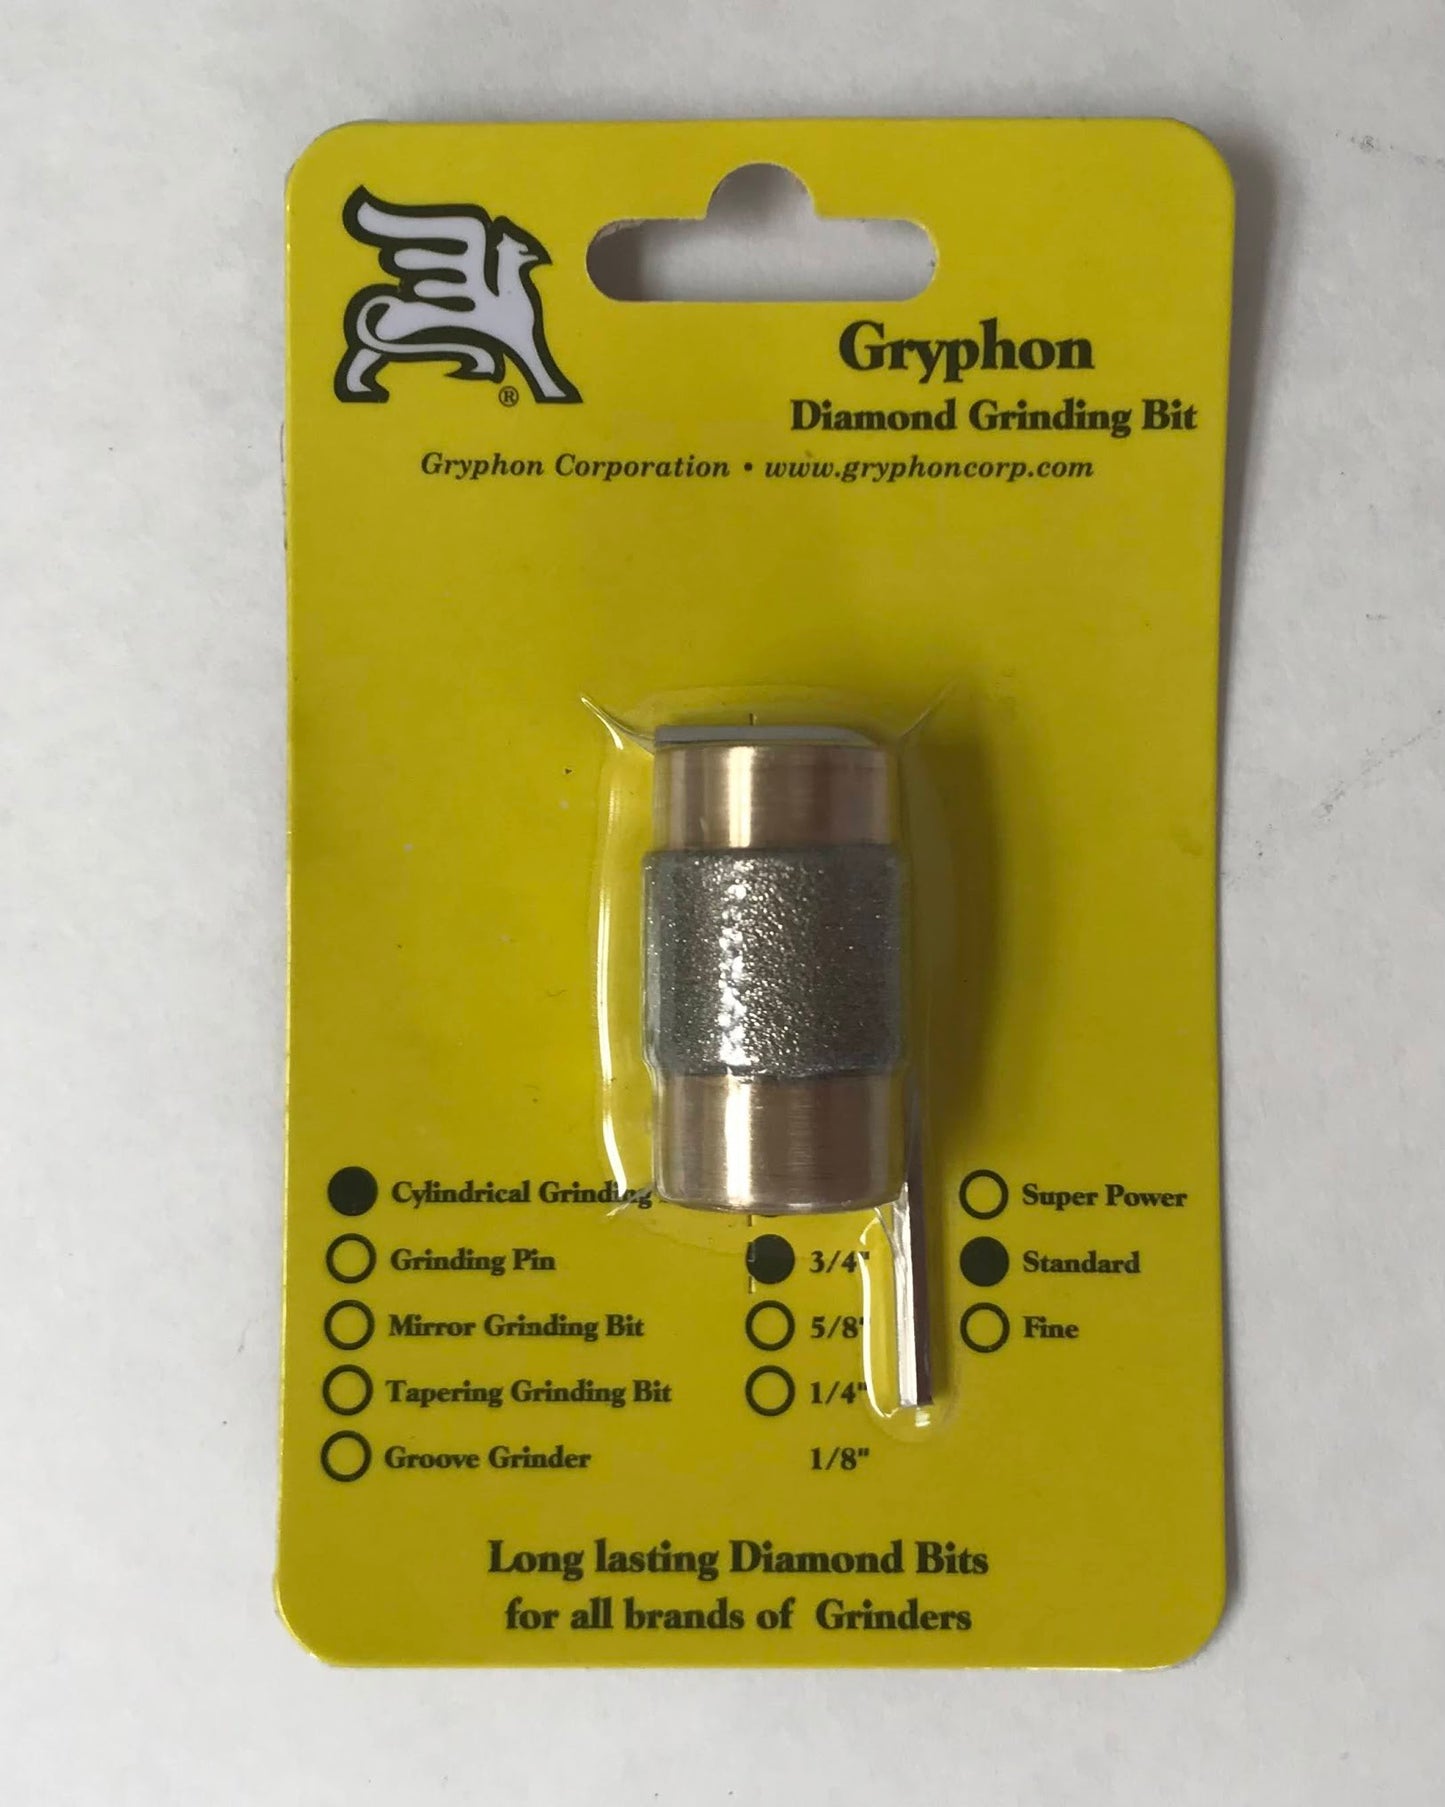 Gryphon 19 mm grinding bit